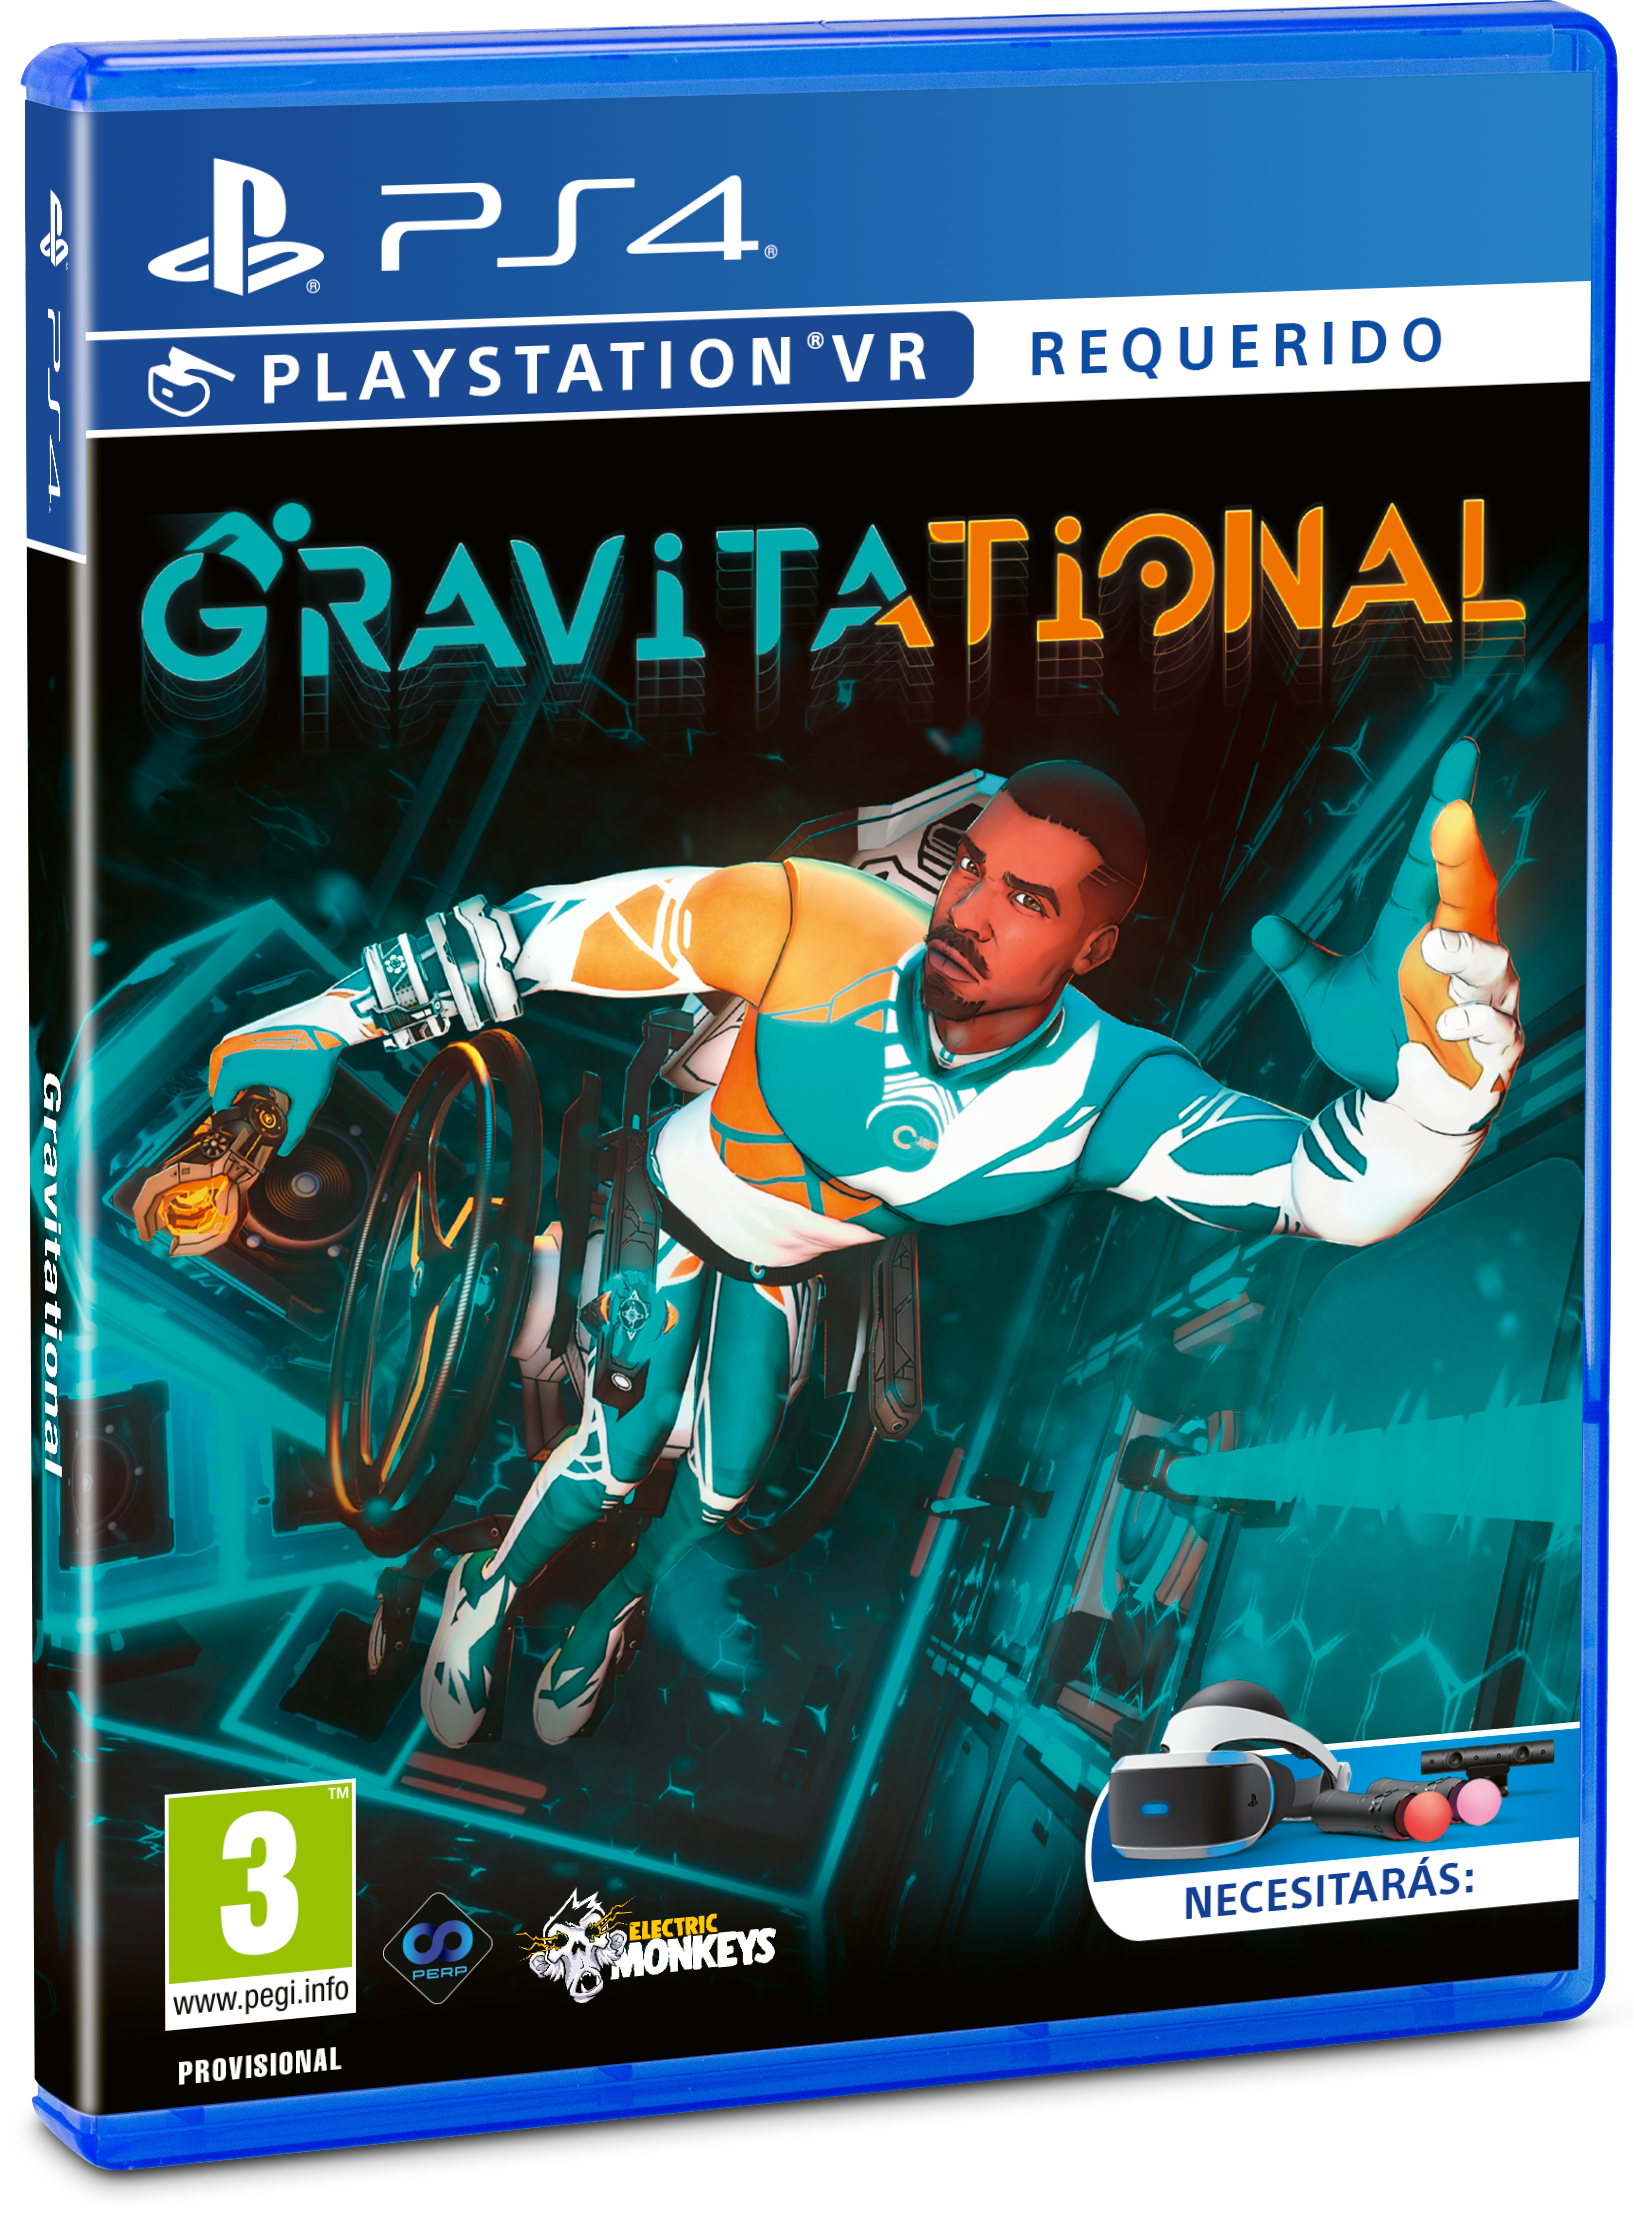 Gravitational